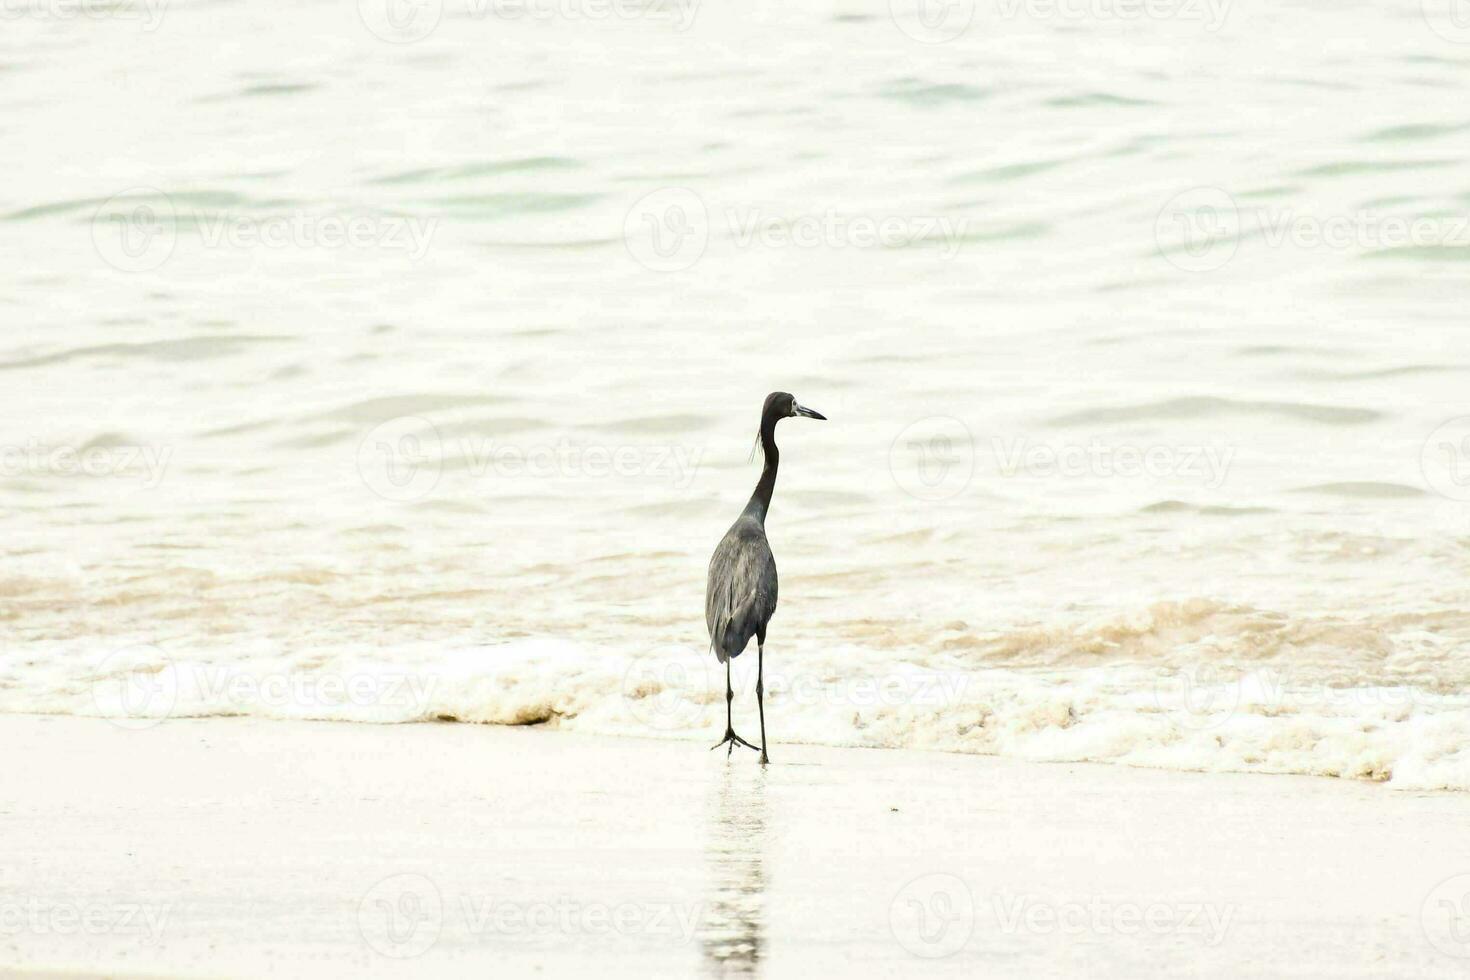 a bird walking along the beach in the ocean photo